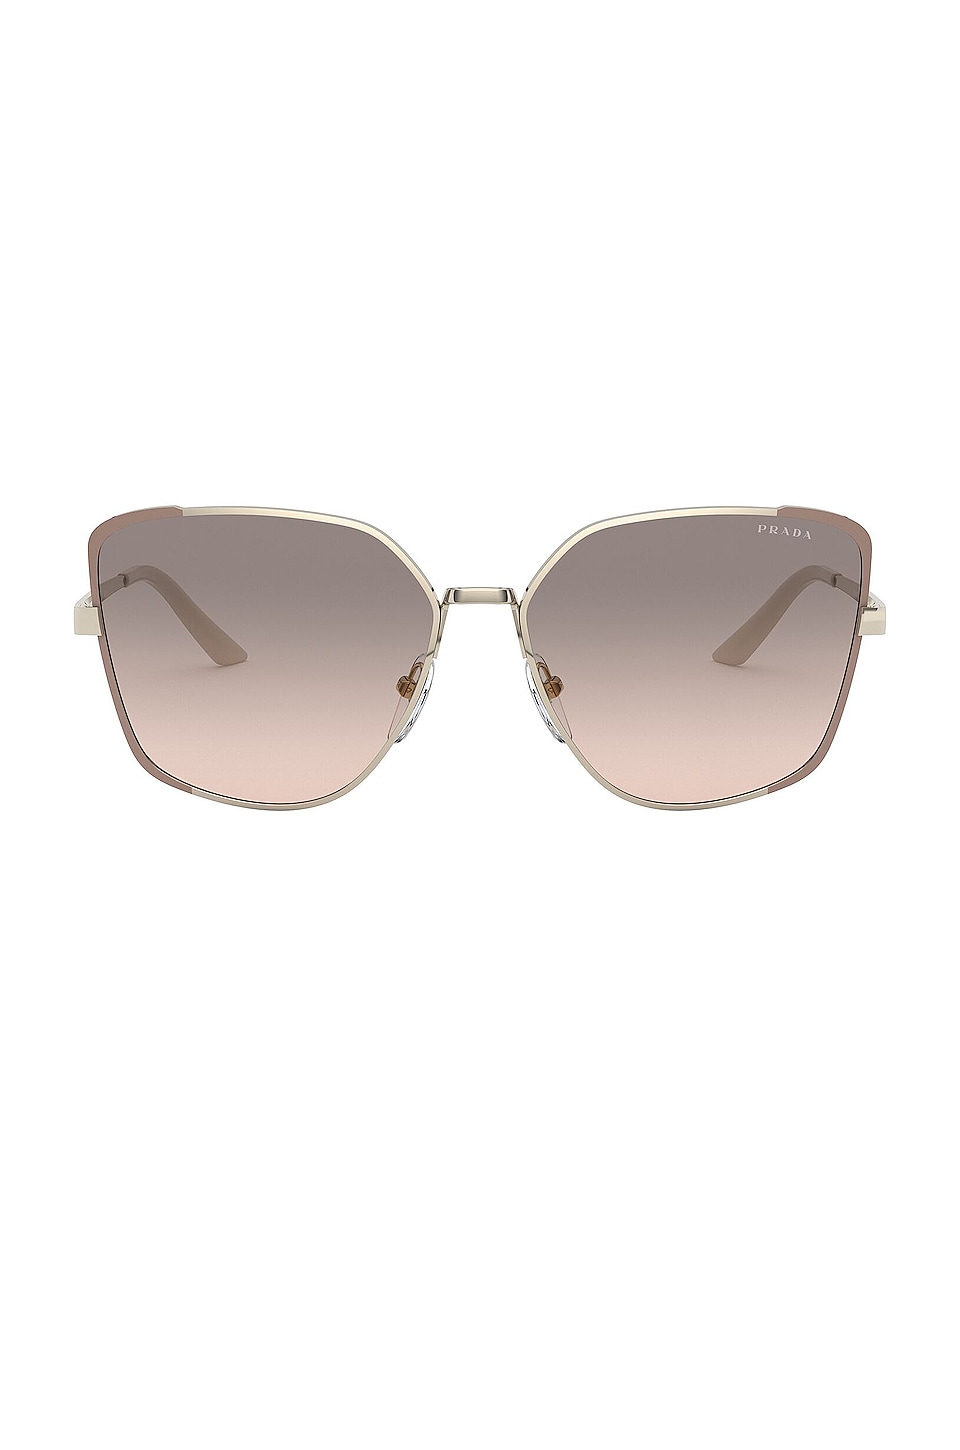 prada rose gold sunglasses